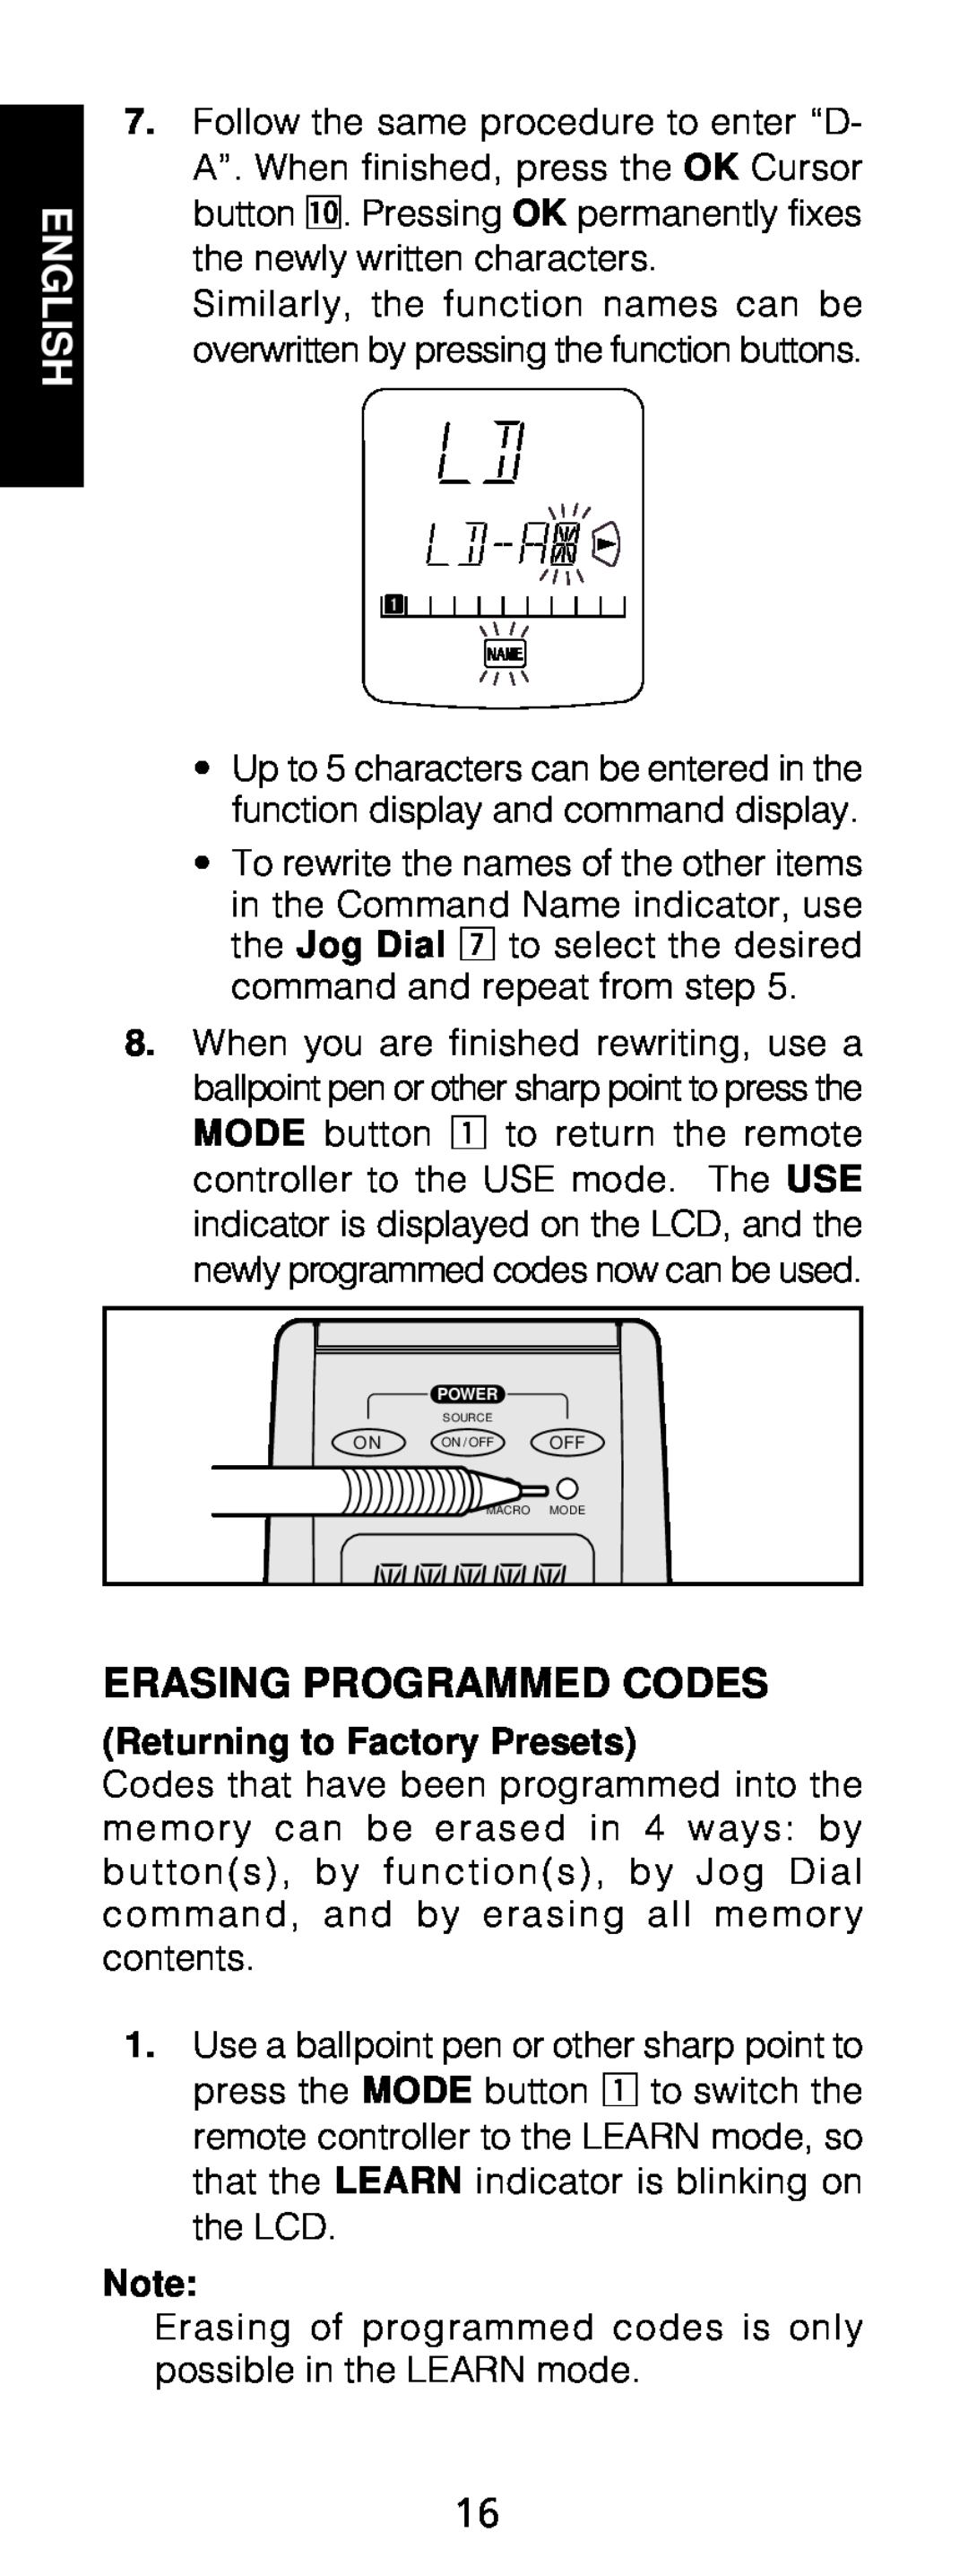 Marantz RC1200 manual Erasing Programmed Codes, Returning to Factory Presets, English 